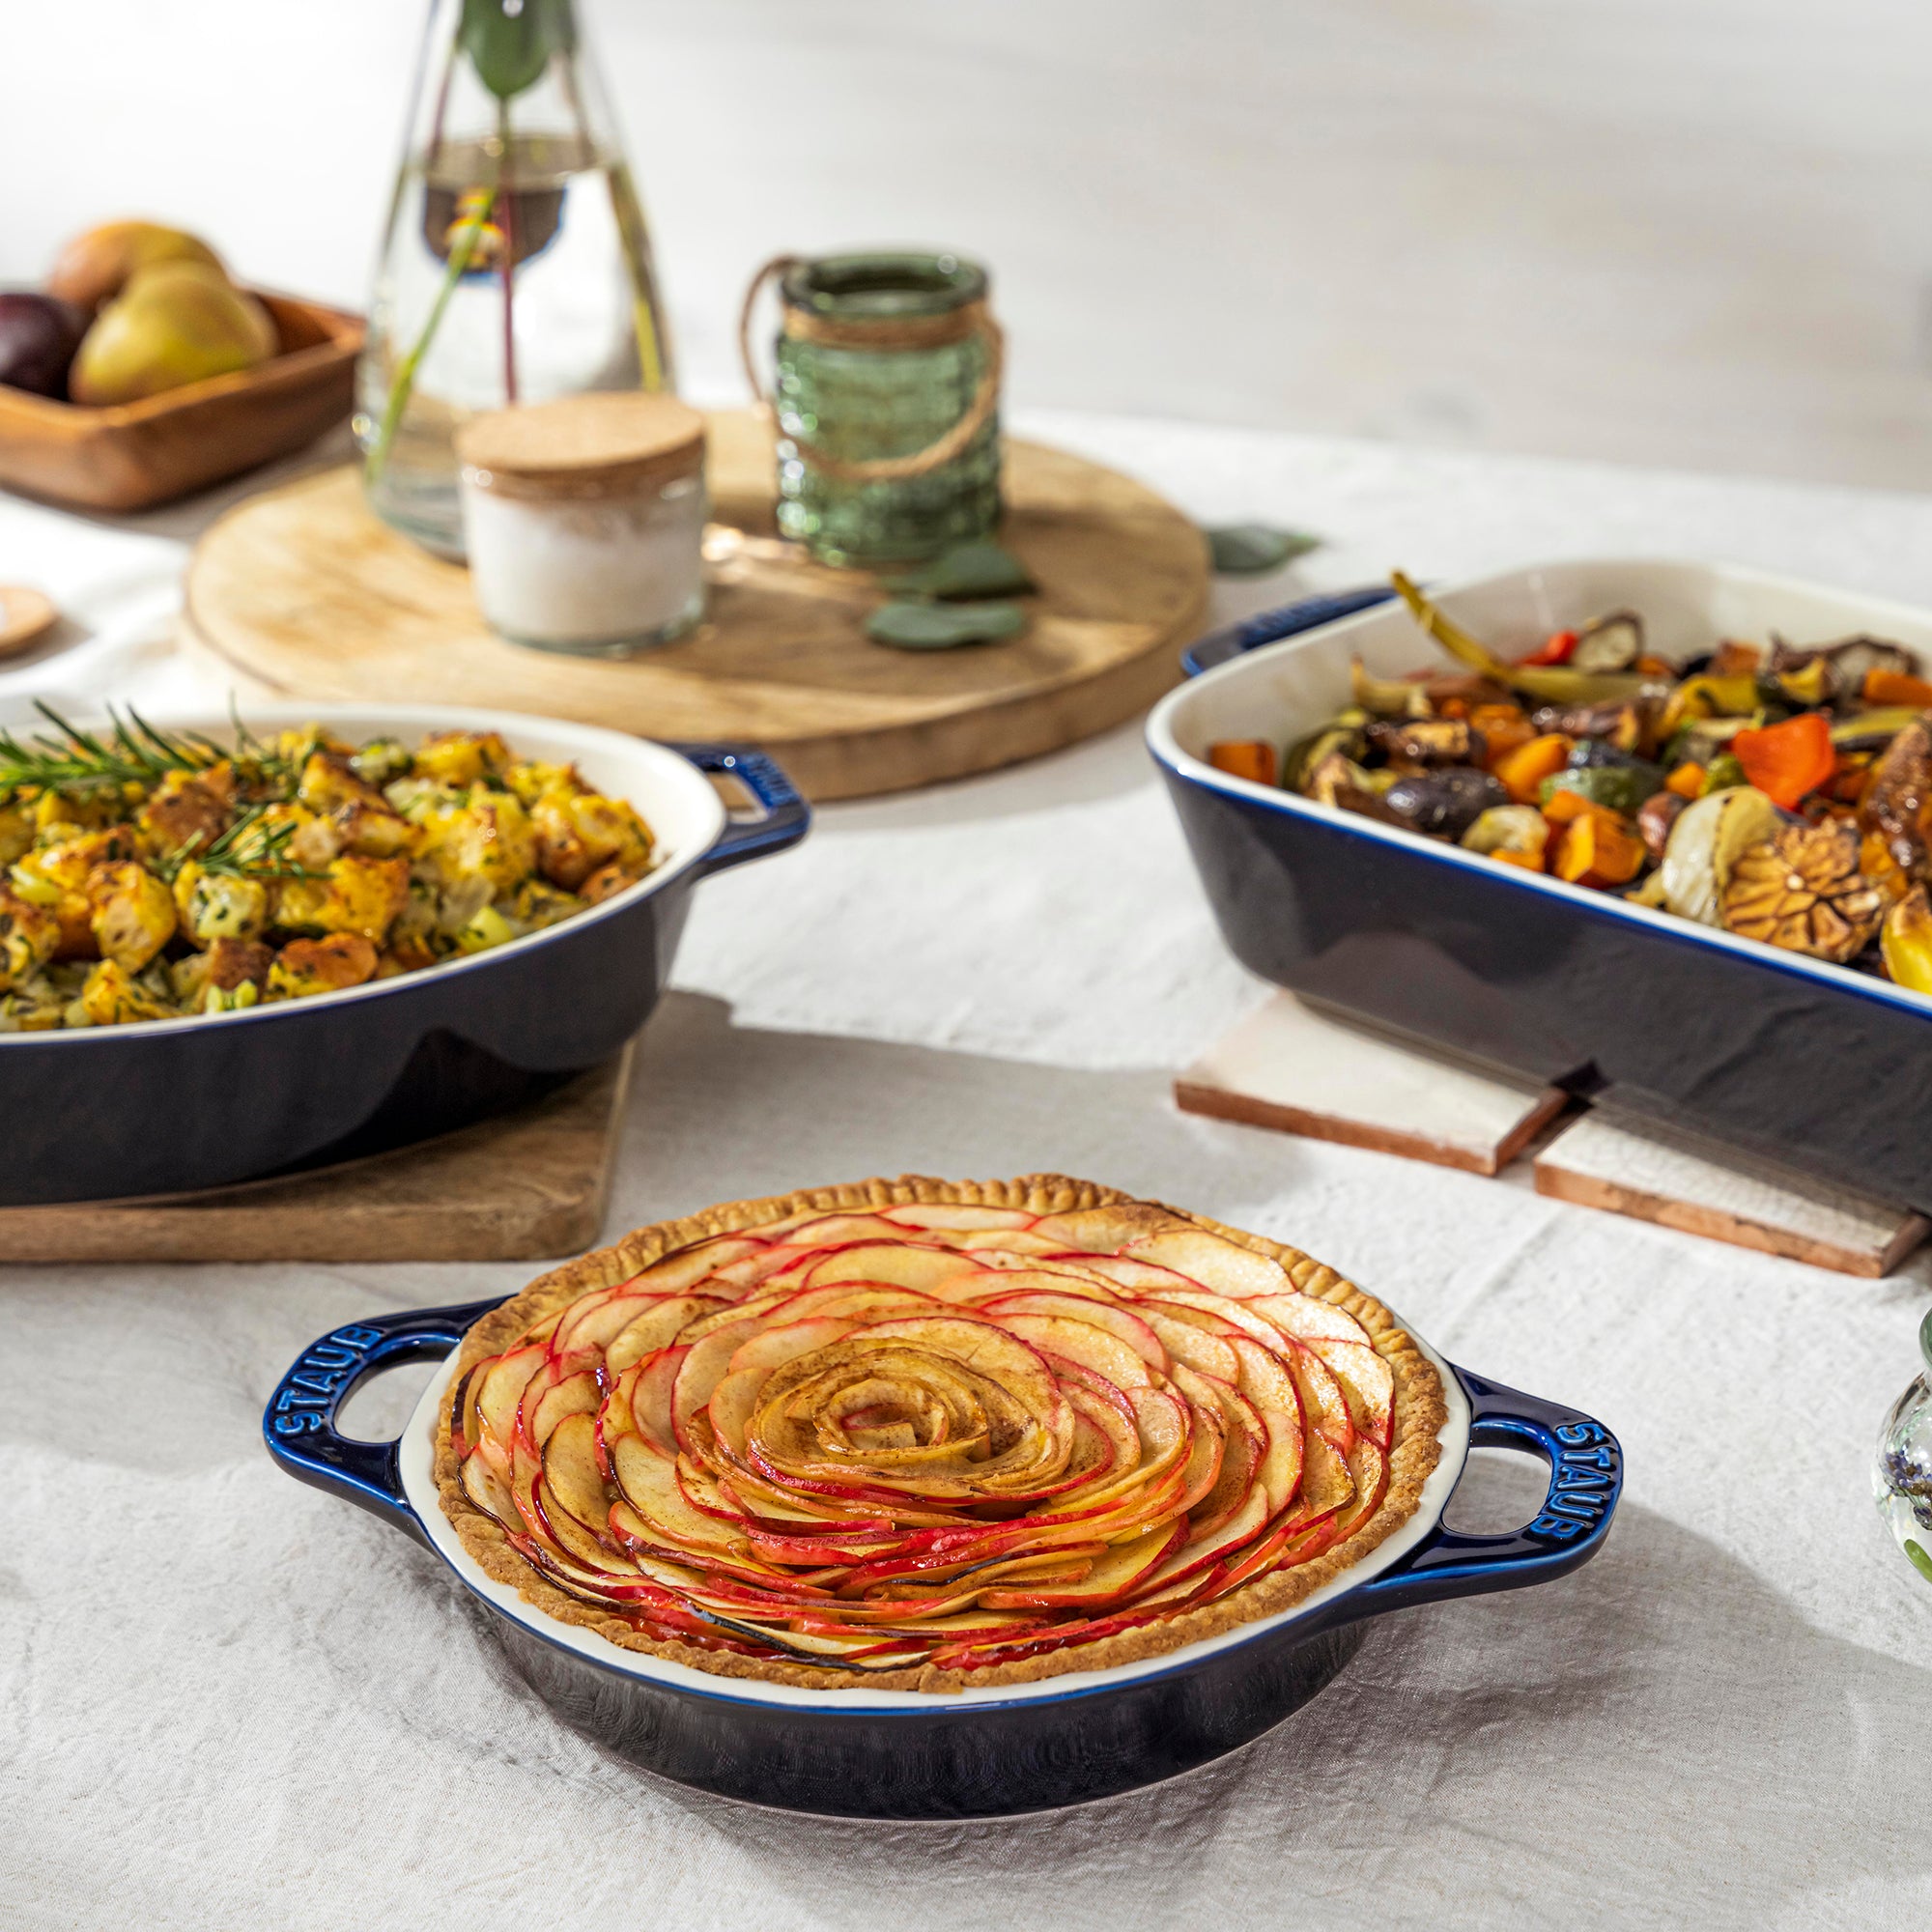  STAUB Ceramics Rectangular Baking Dish Set, Casserole Dish,  Baking Pans for Lasagna, Cake, 2-Piece, Rustic Turquoise: Home & Kitchen